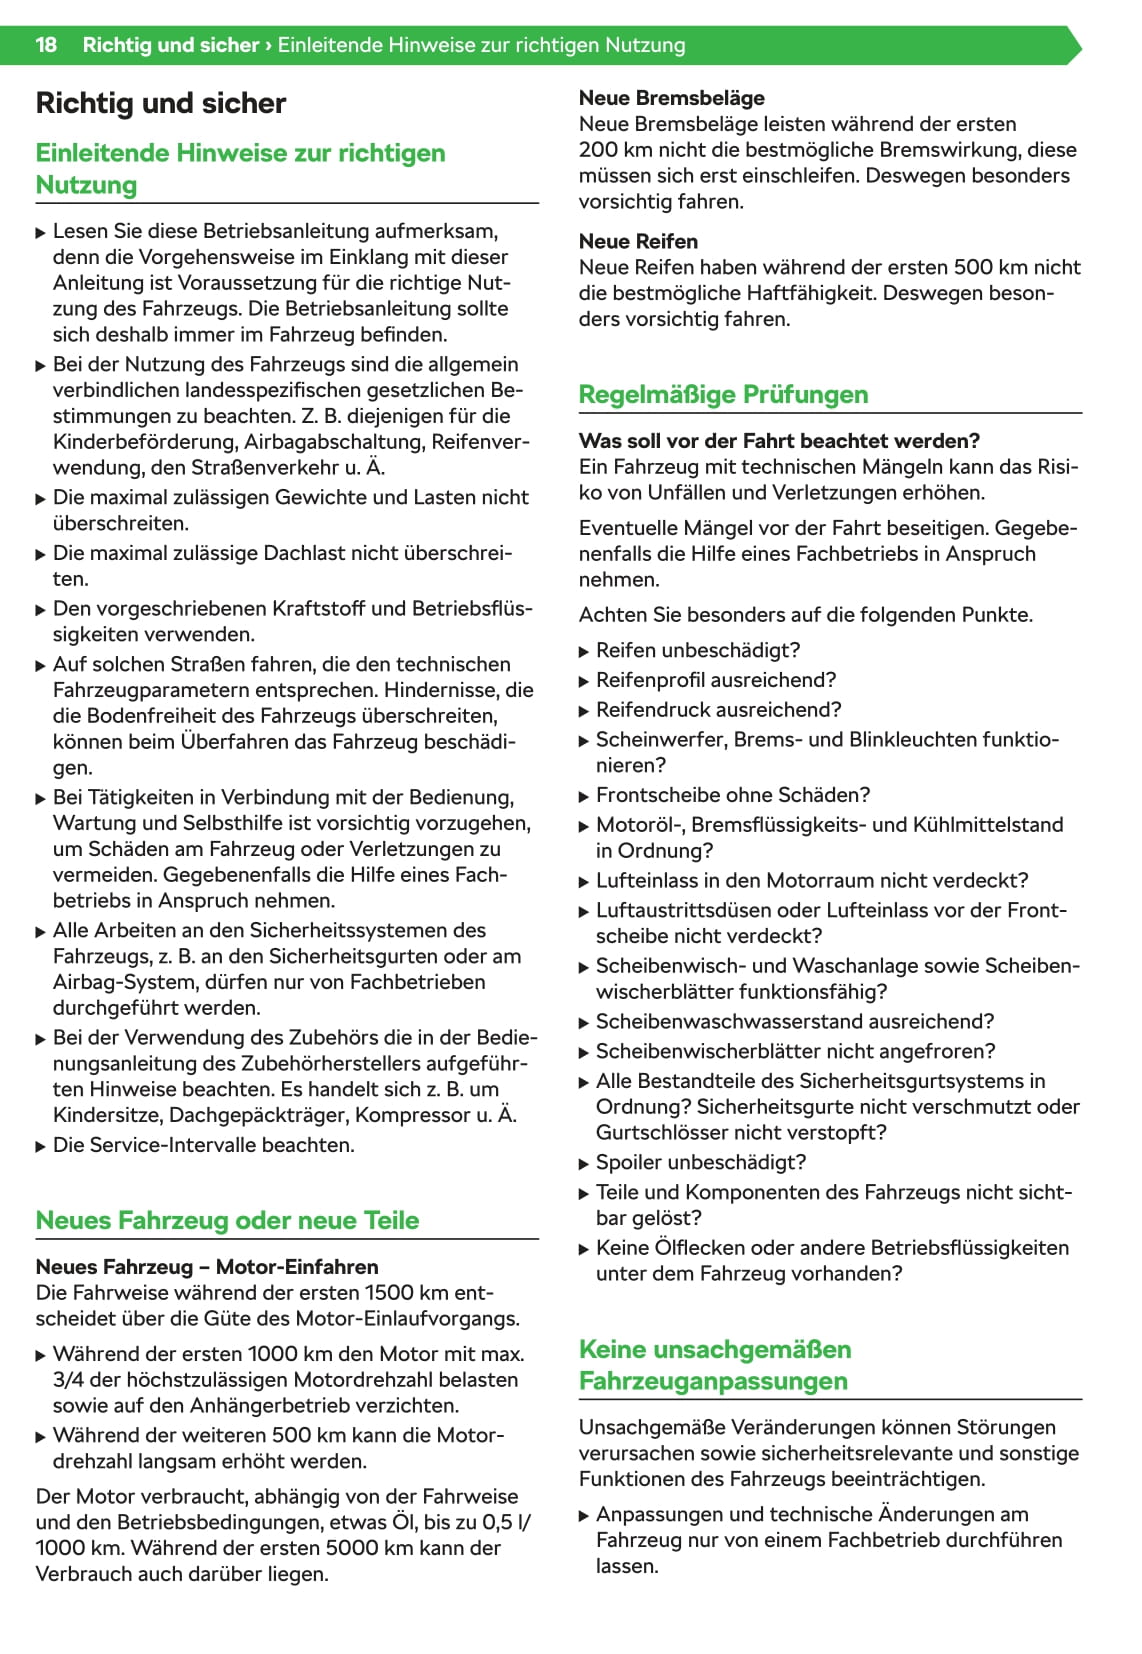 2020-2021 Skoda Karoq Owner's Manual | German